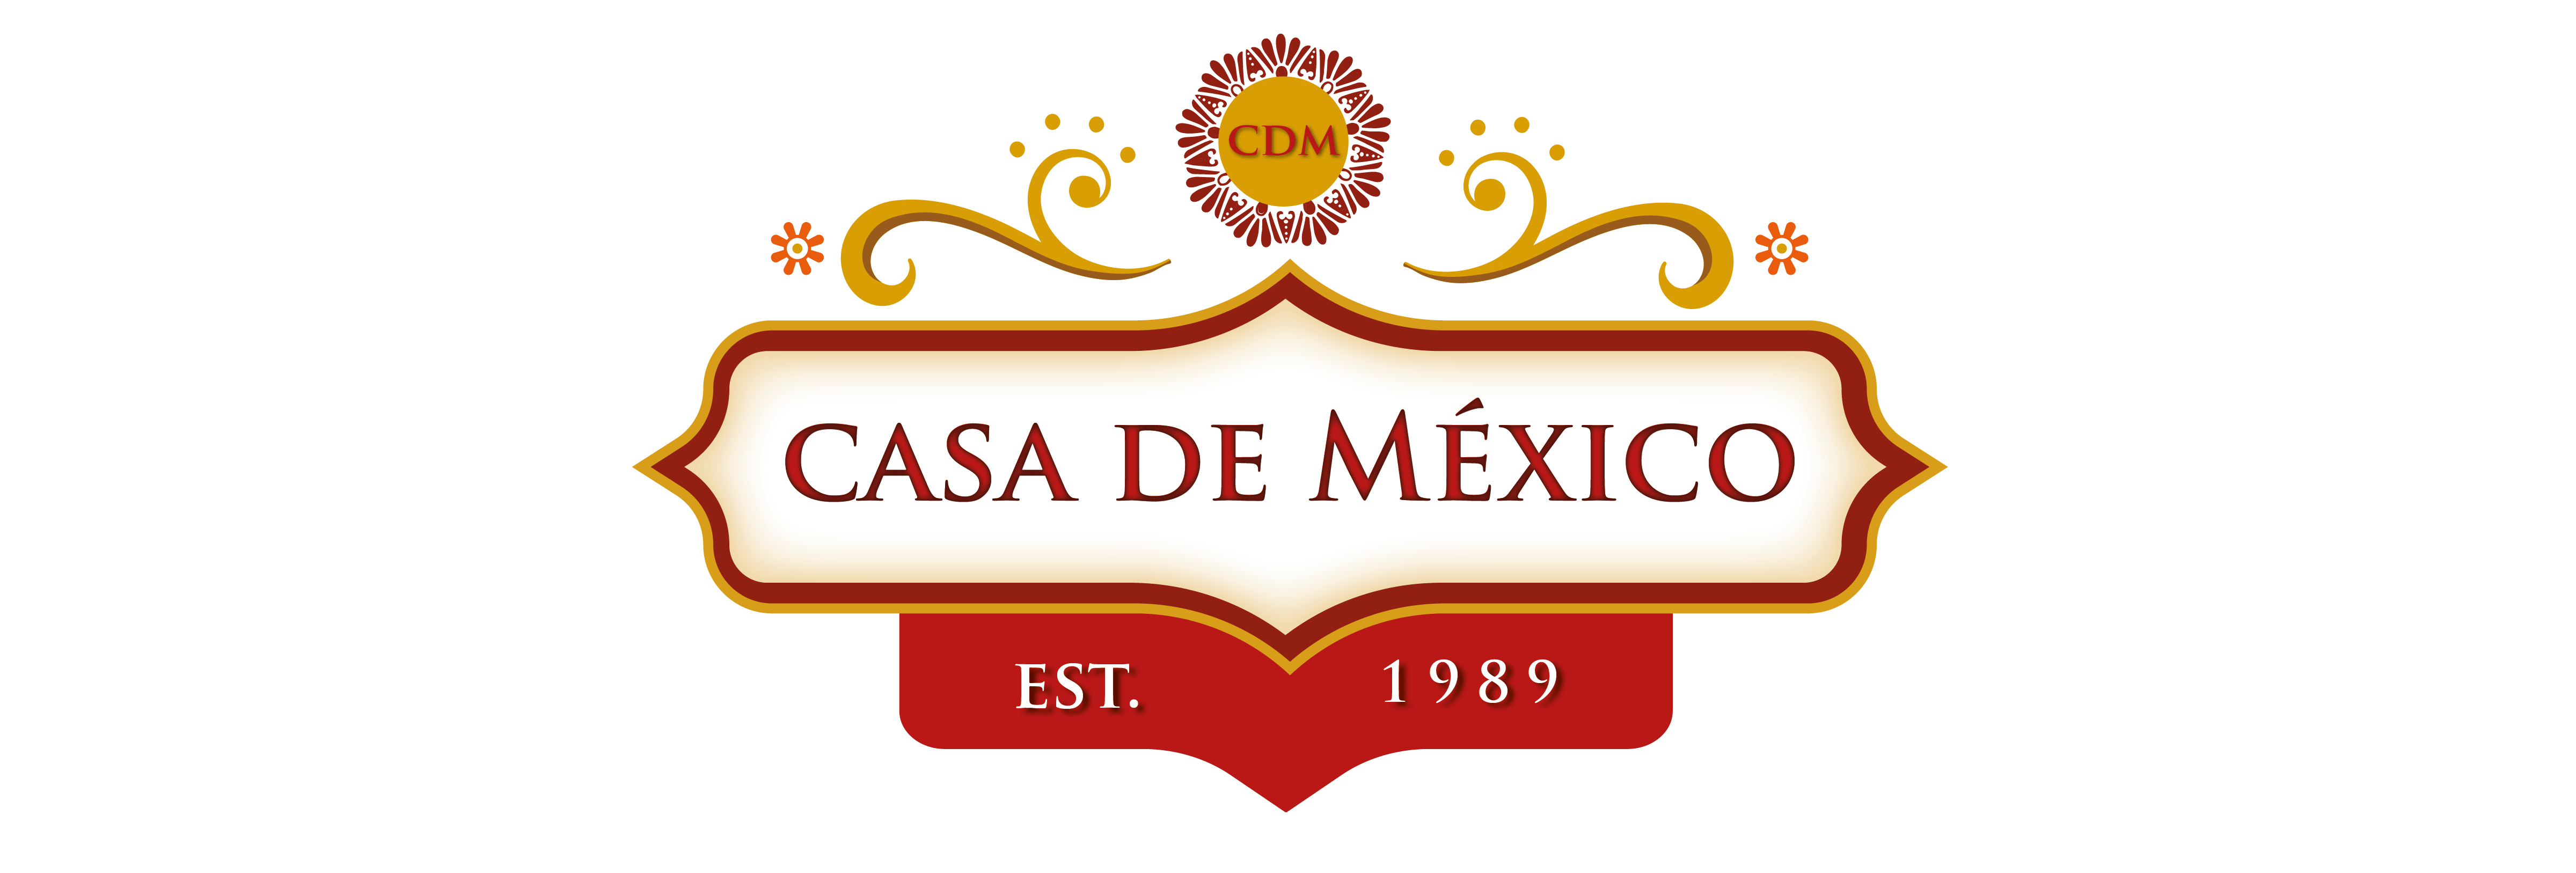 Casa De Mexico - Party Trays To-Go